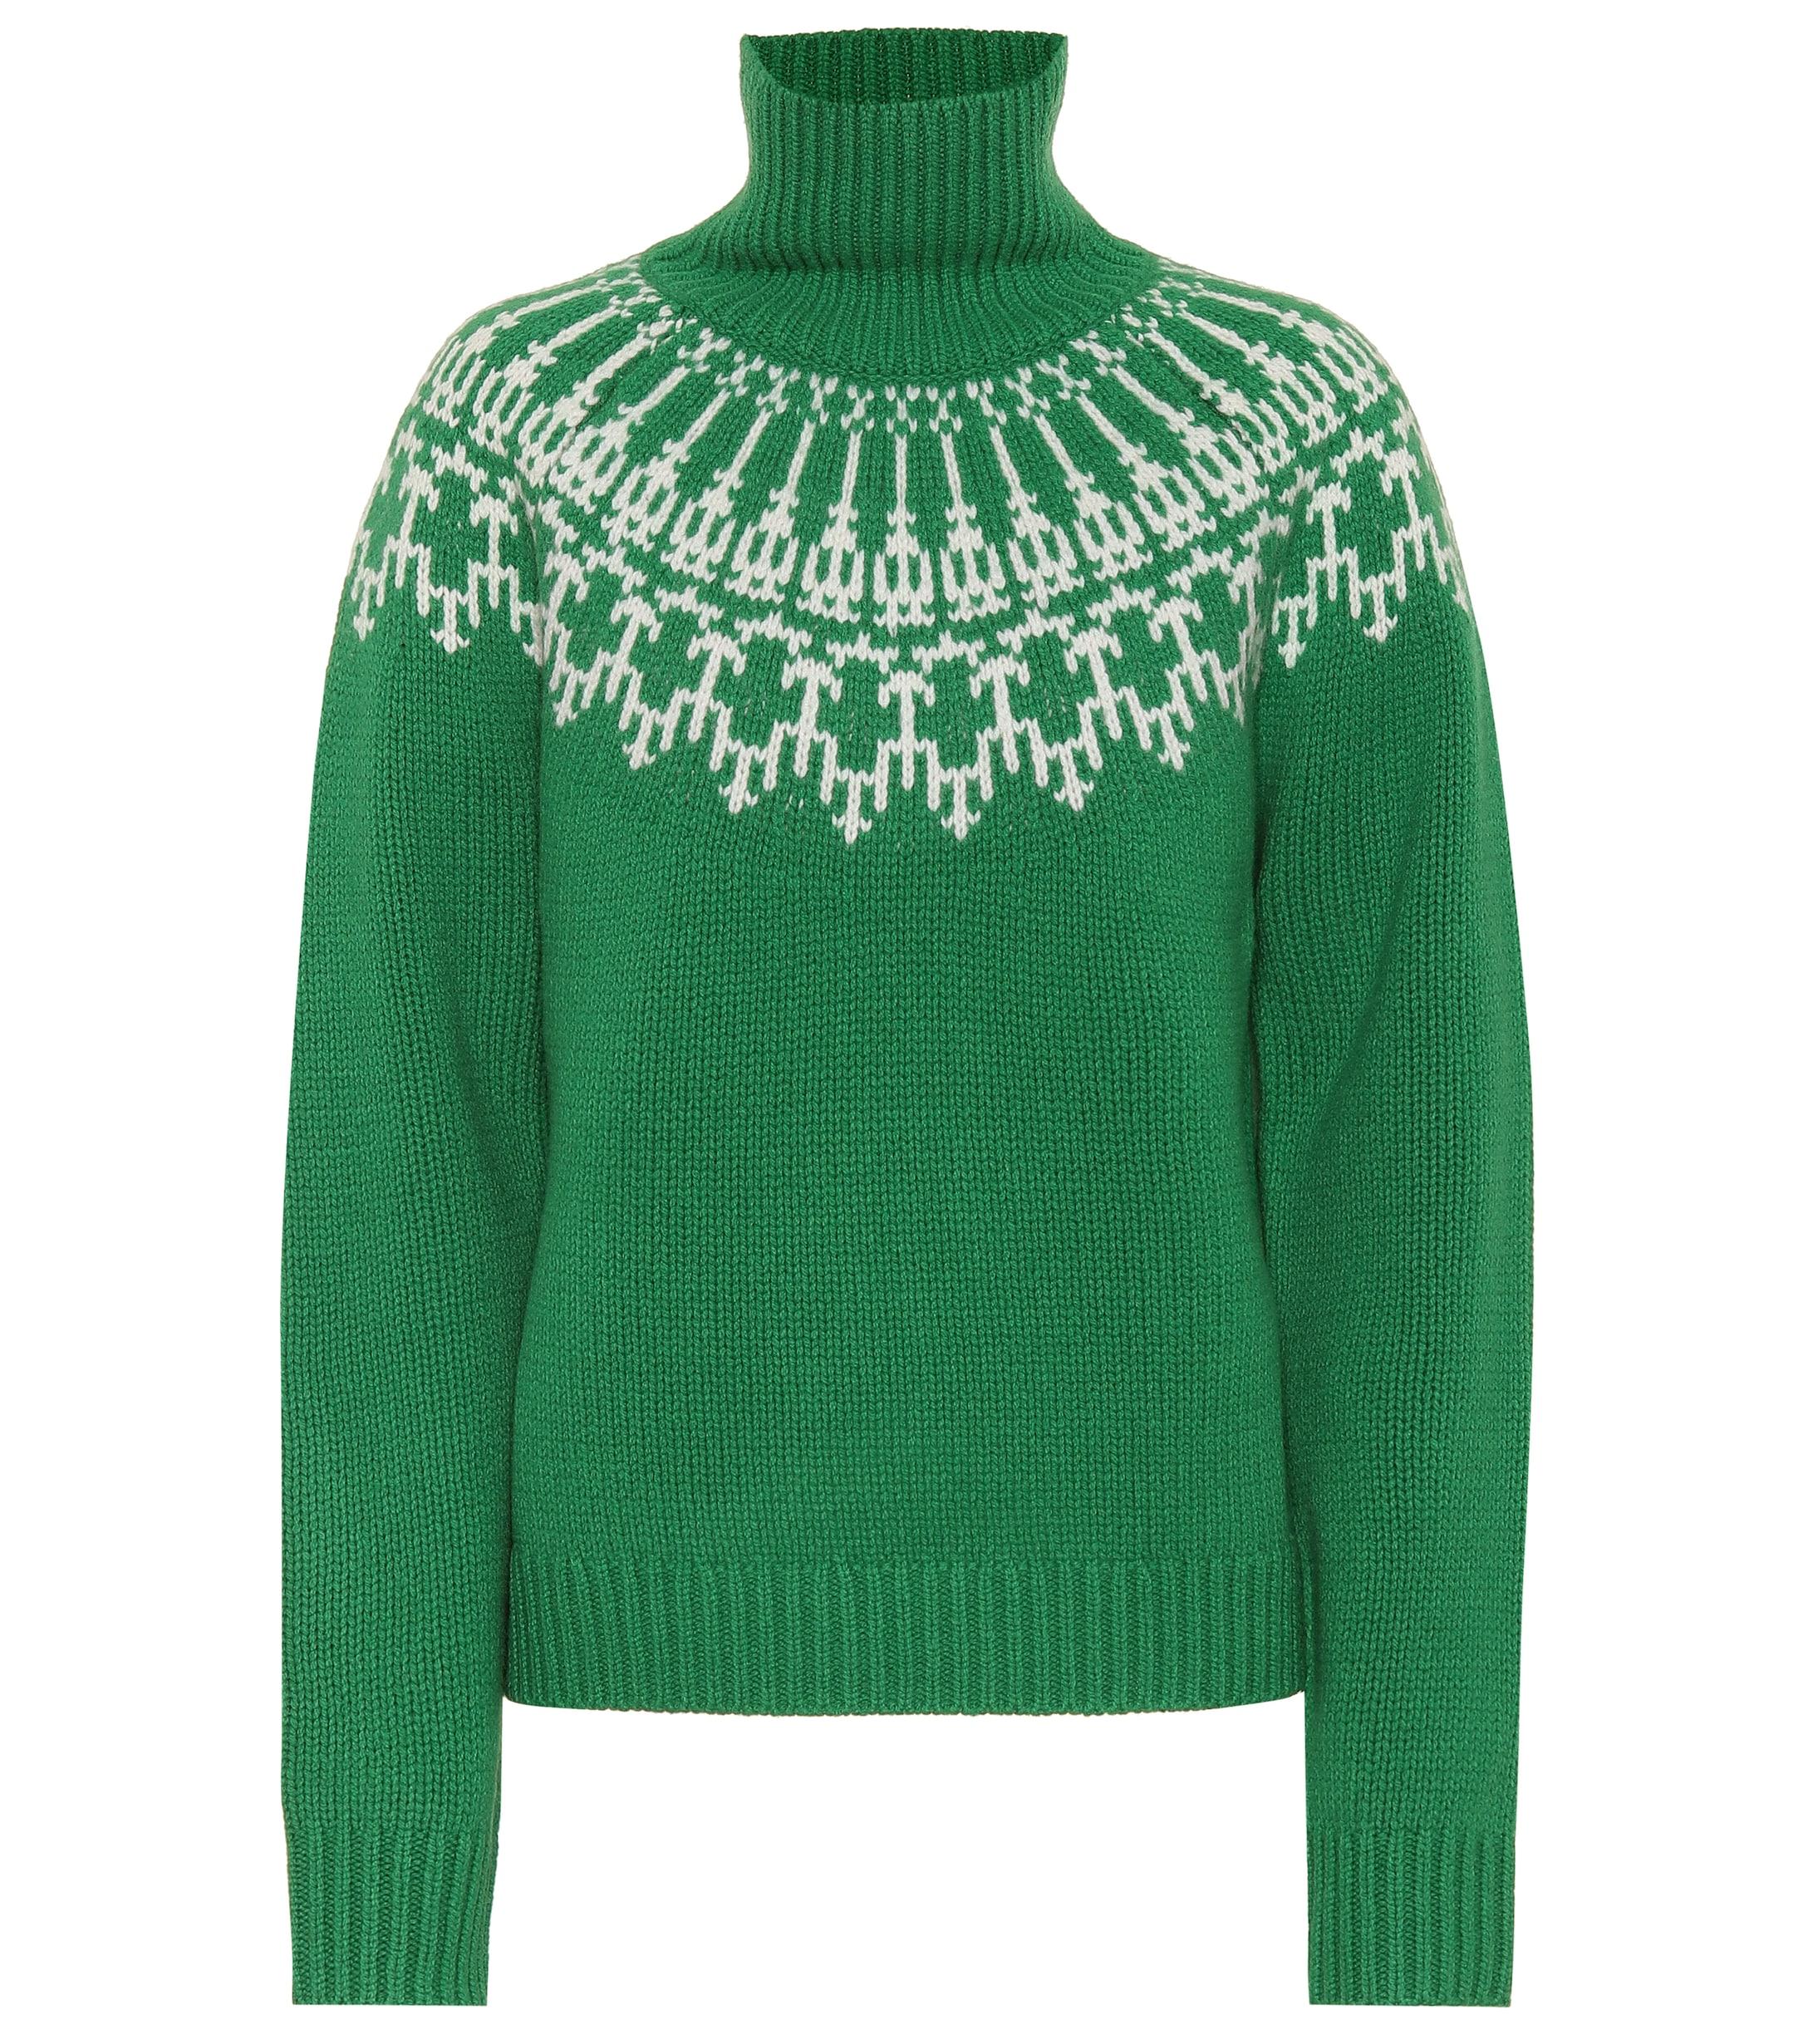 Tory Sport Wool Merino Fair Isle Sweater in Green - Lyst